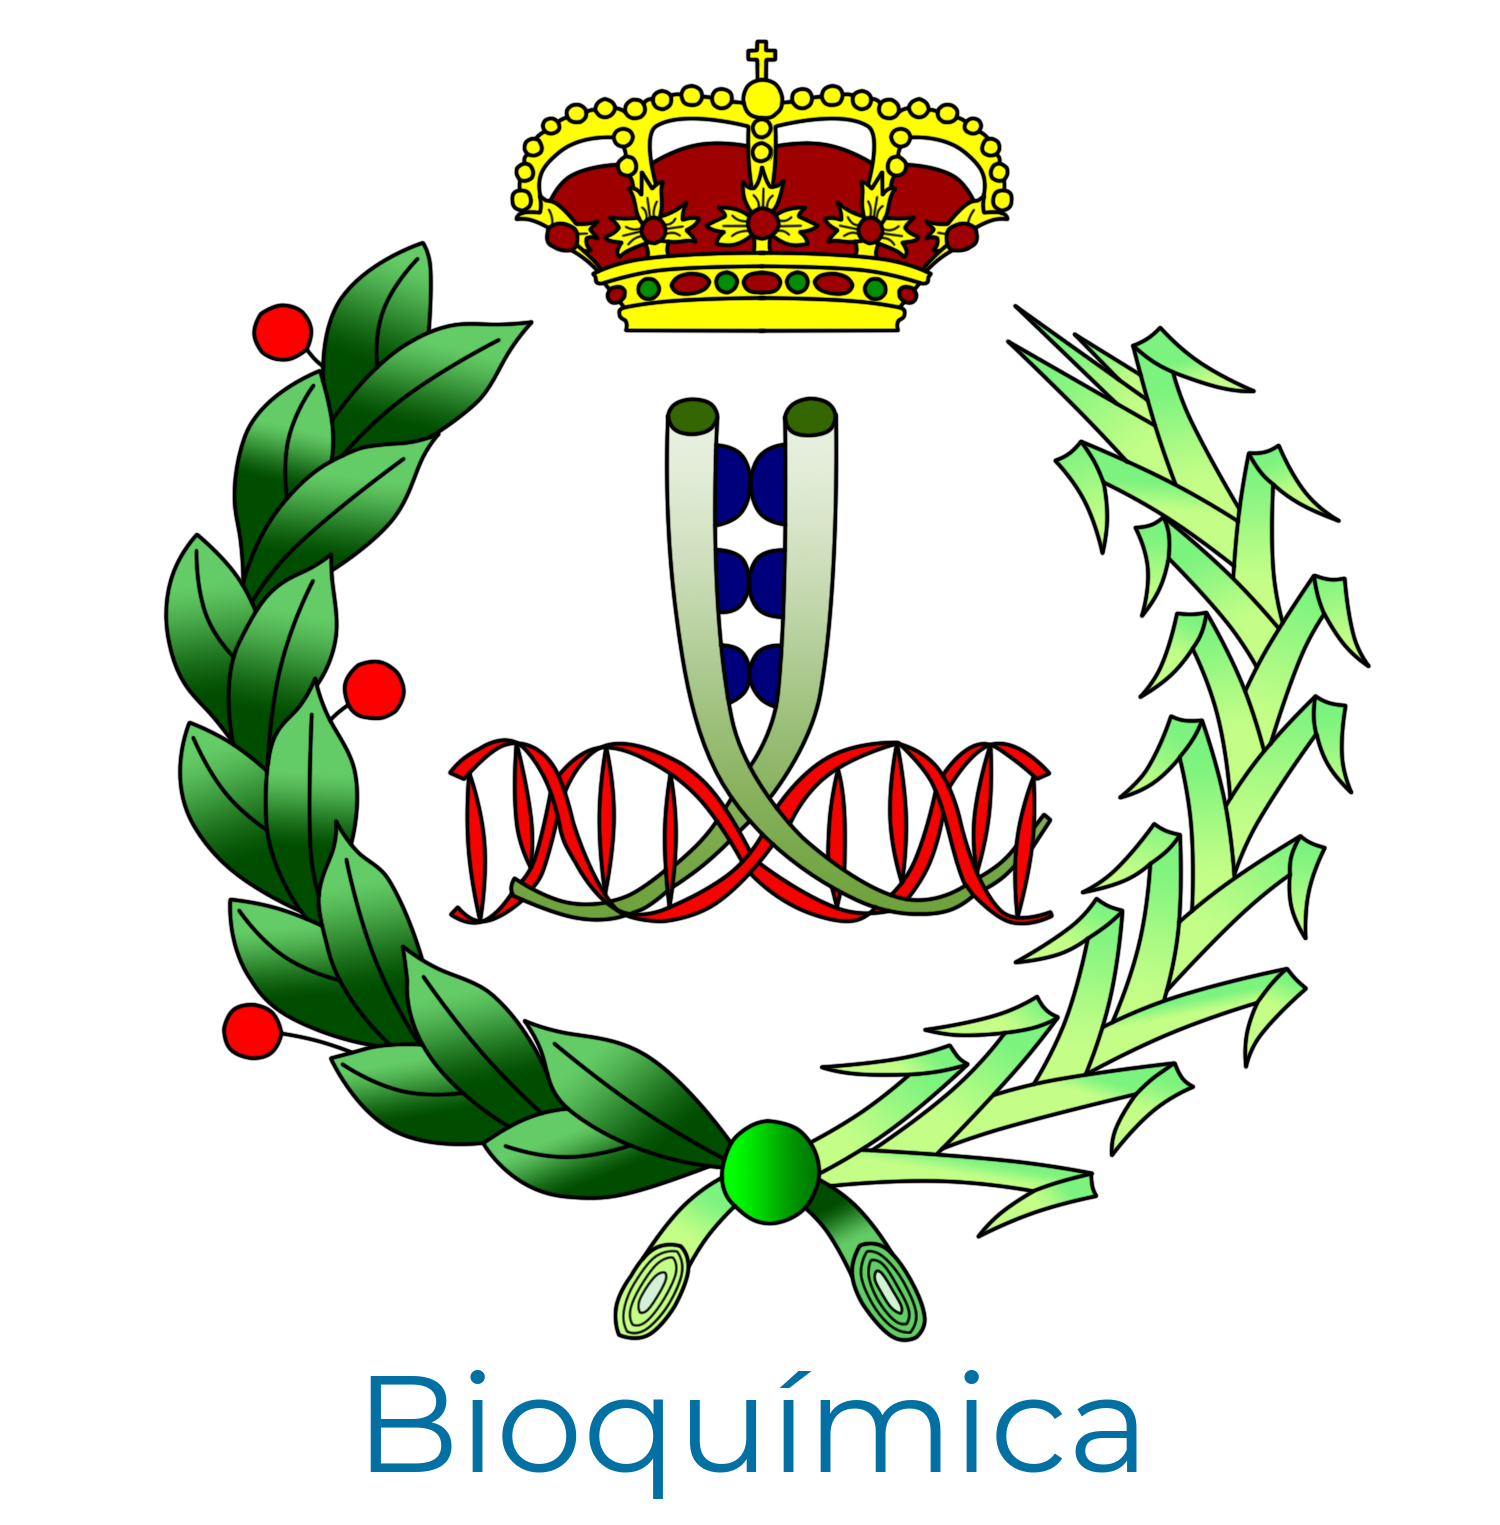 Bioquimica logo